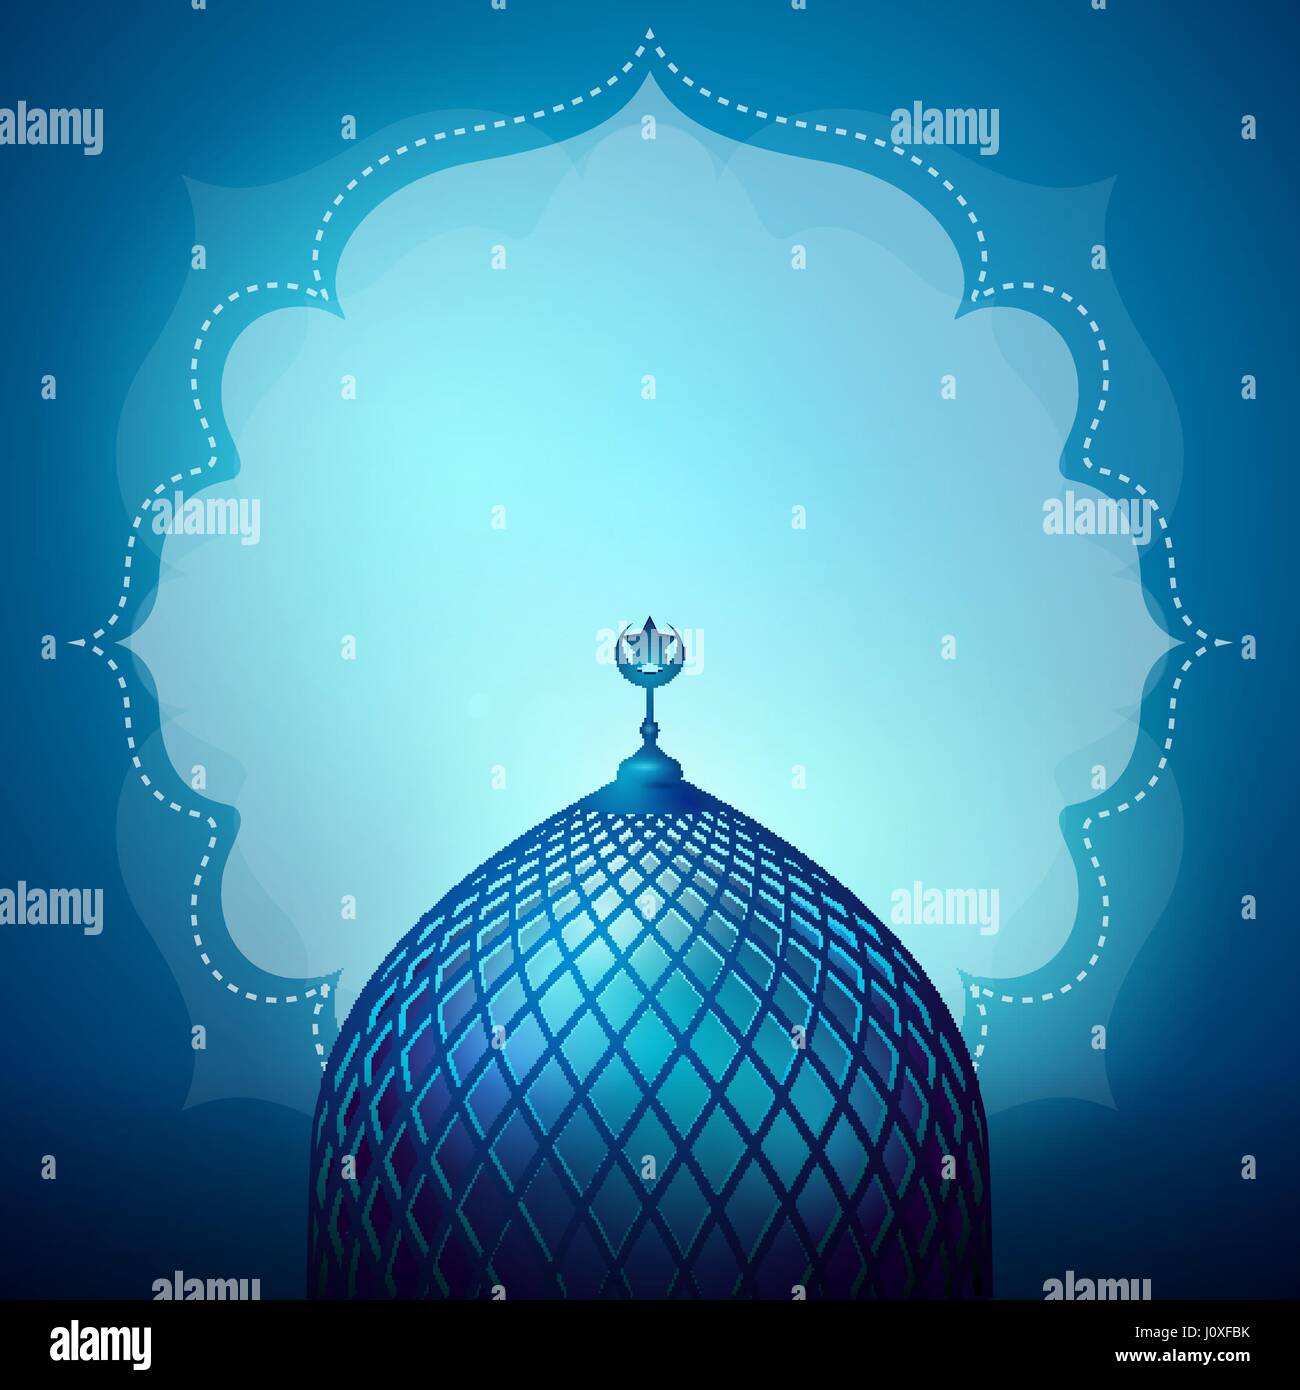 Download 45 Background Islamic HD Terbaru